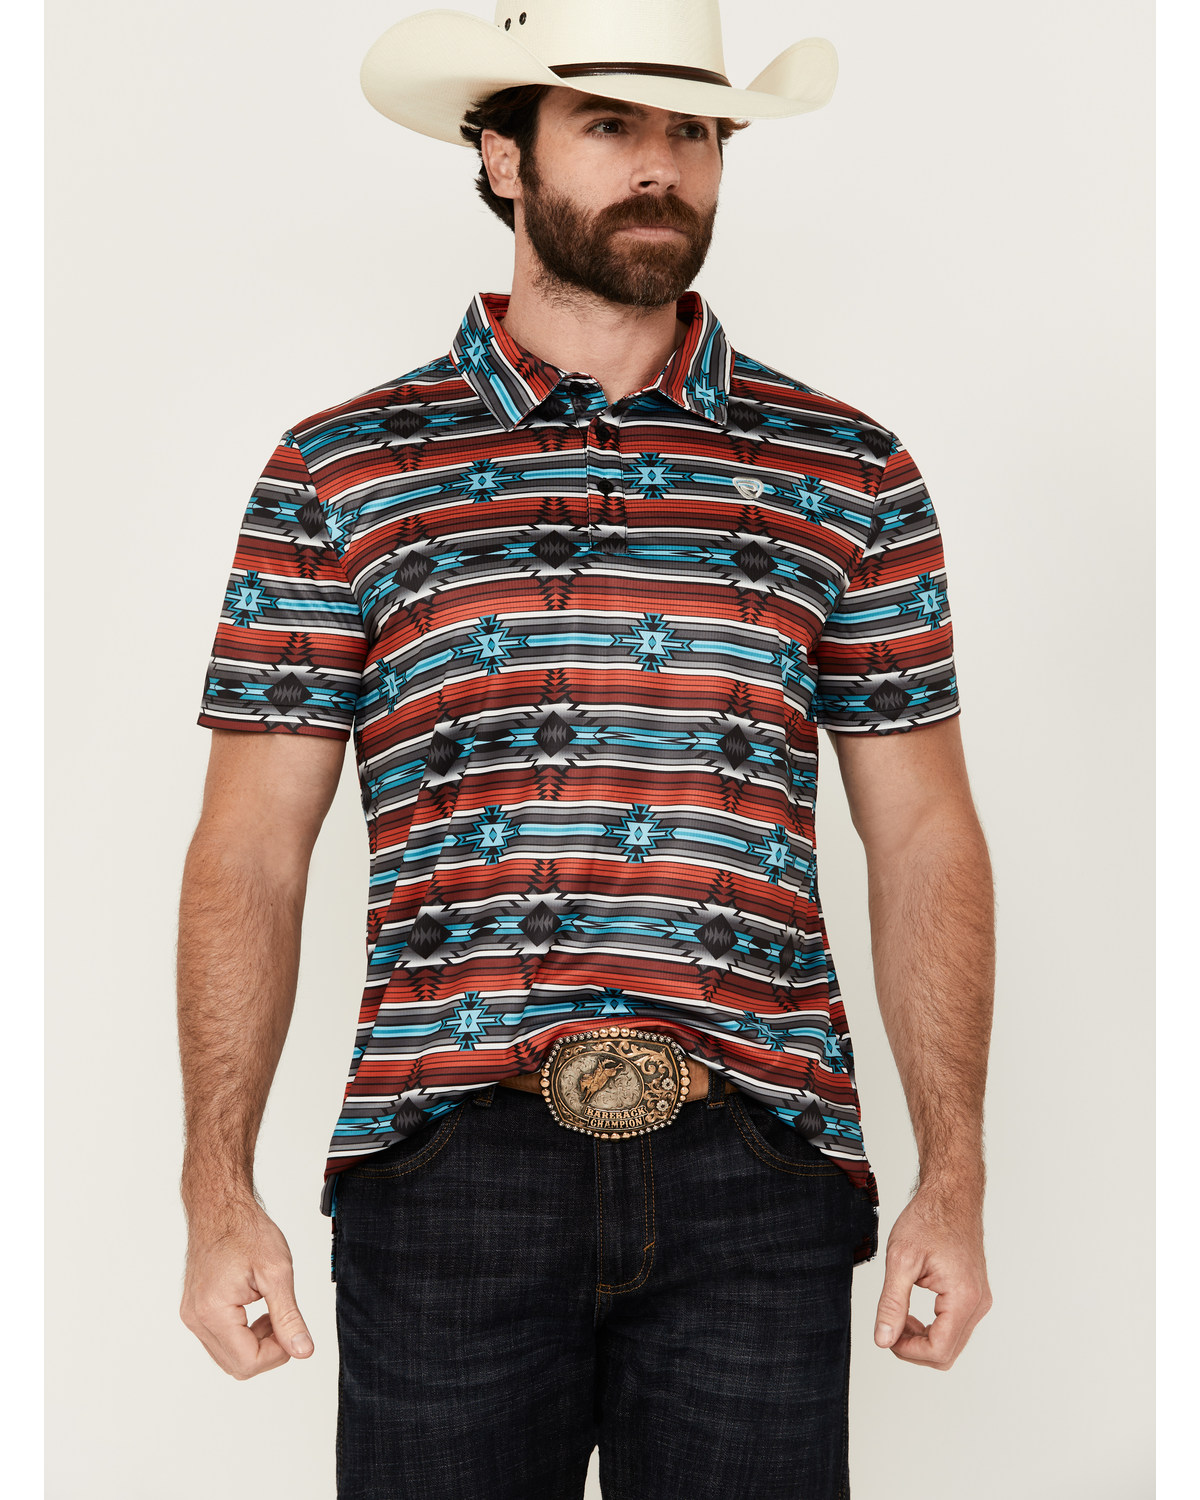 Rock & Roll Denim Men's Southwestern Striped Short Sleeve Stretch Polo Shirt